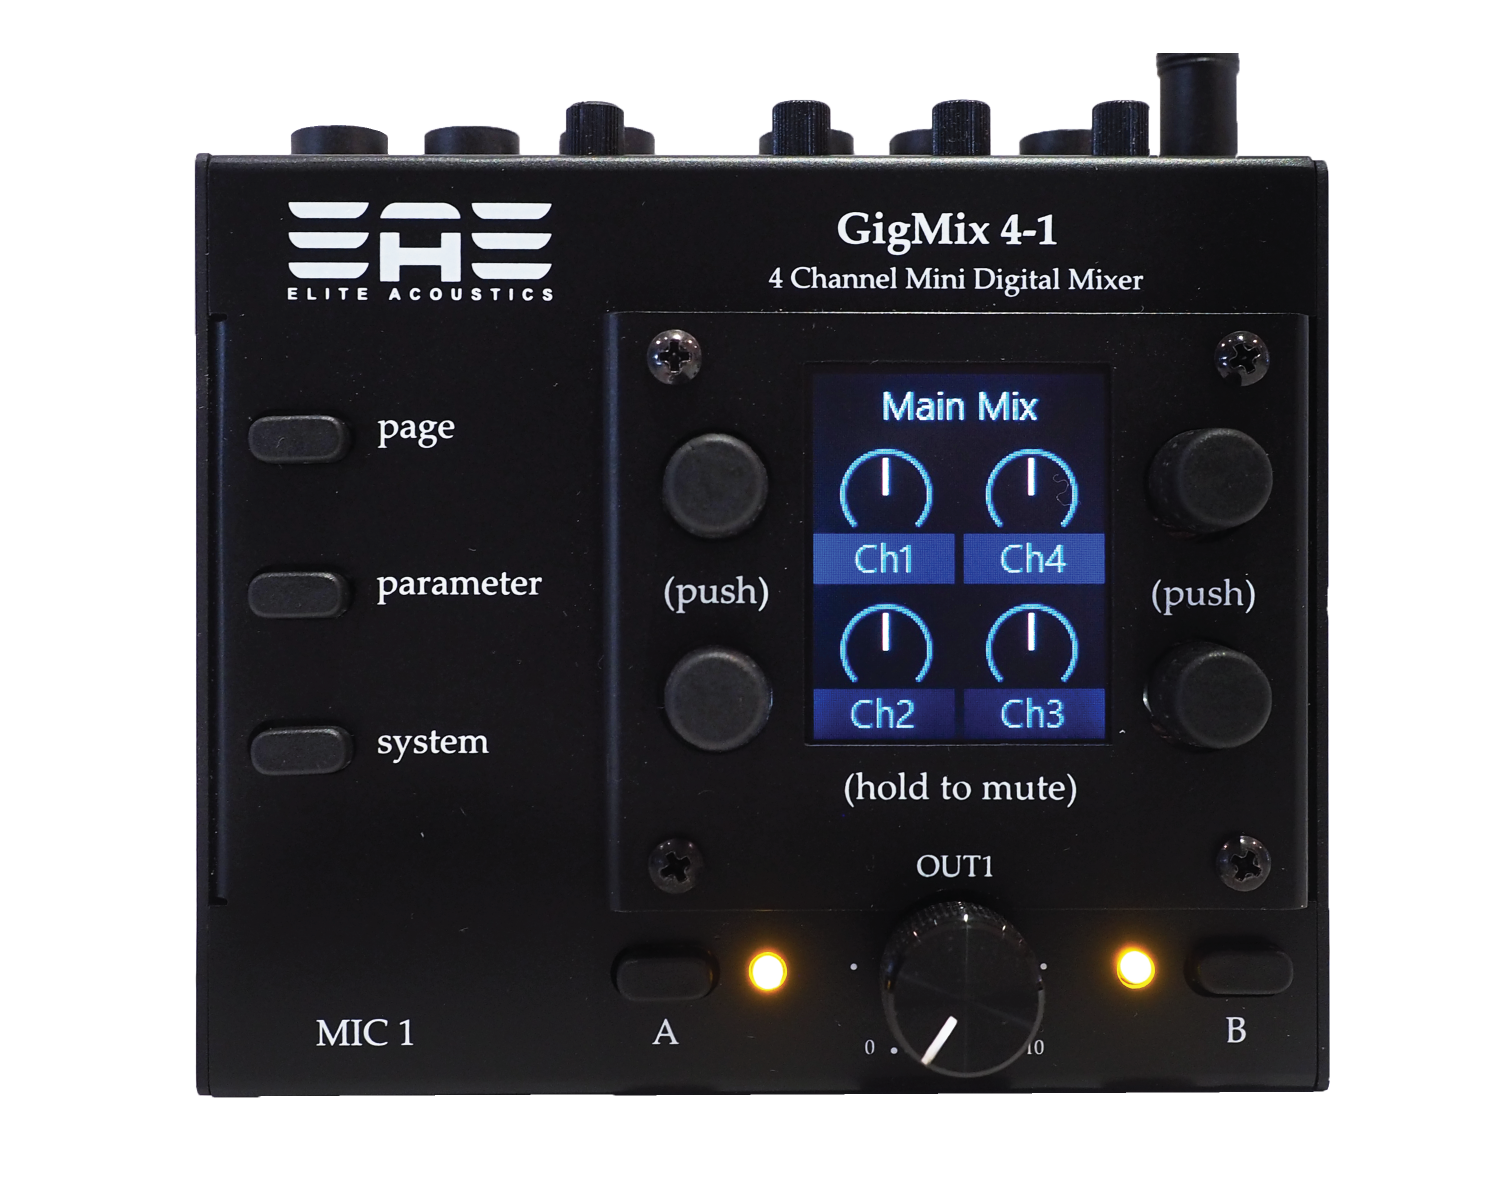 Elite Acoustics EAE GigMix 4-1 - Four Channel Mini Digital Mixer